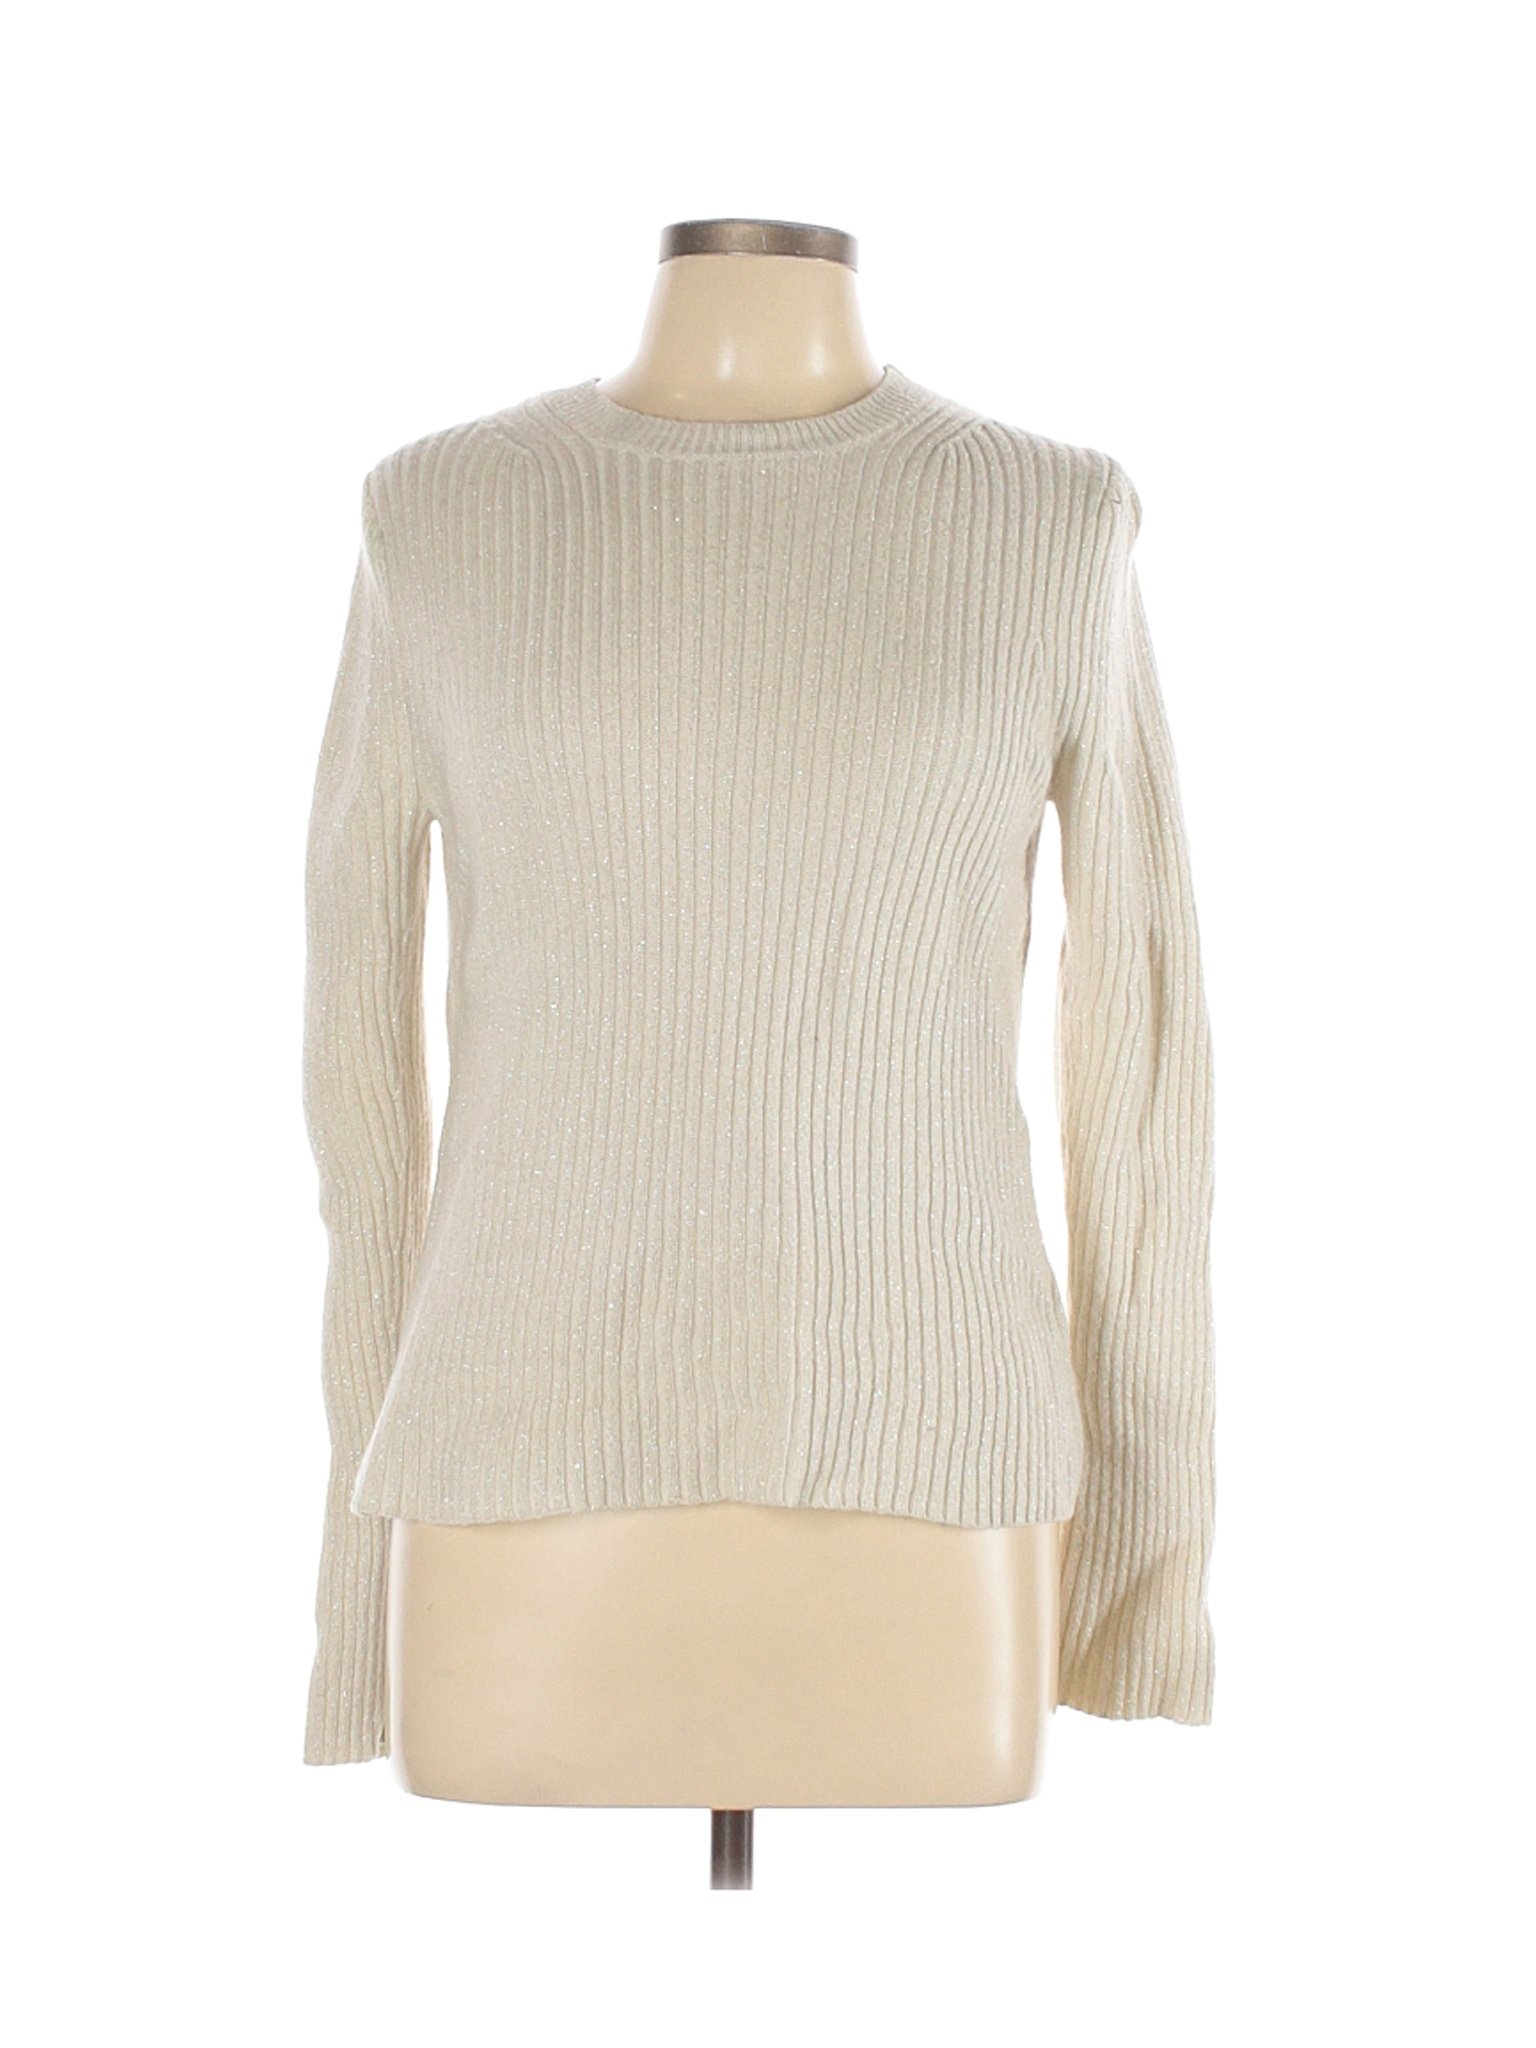 Uniqlo U Women Ivory Wool Pullover Sweater L | eBay